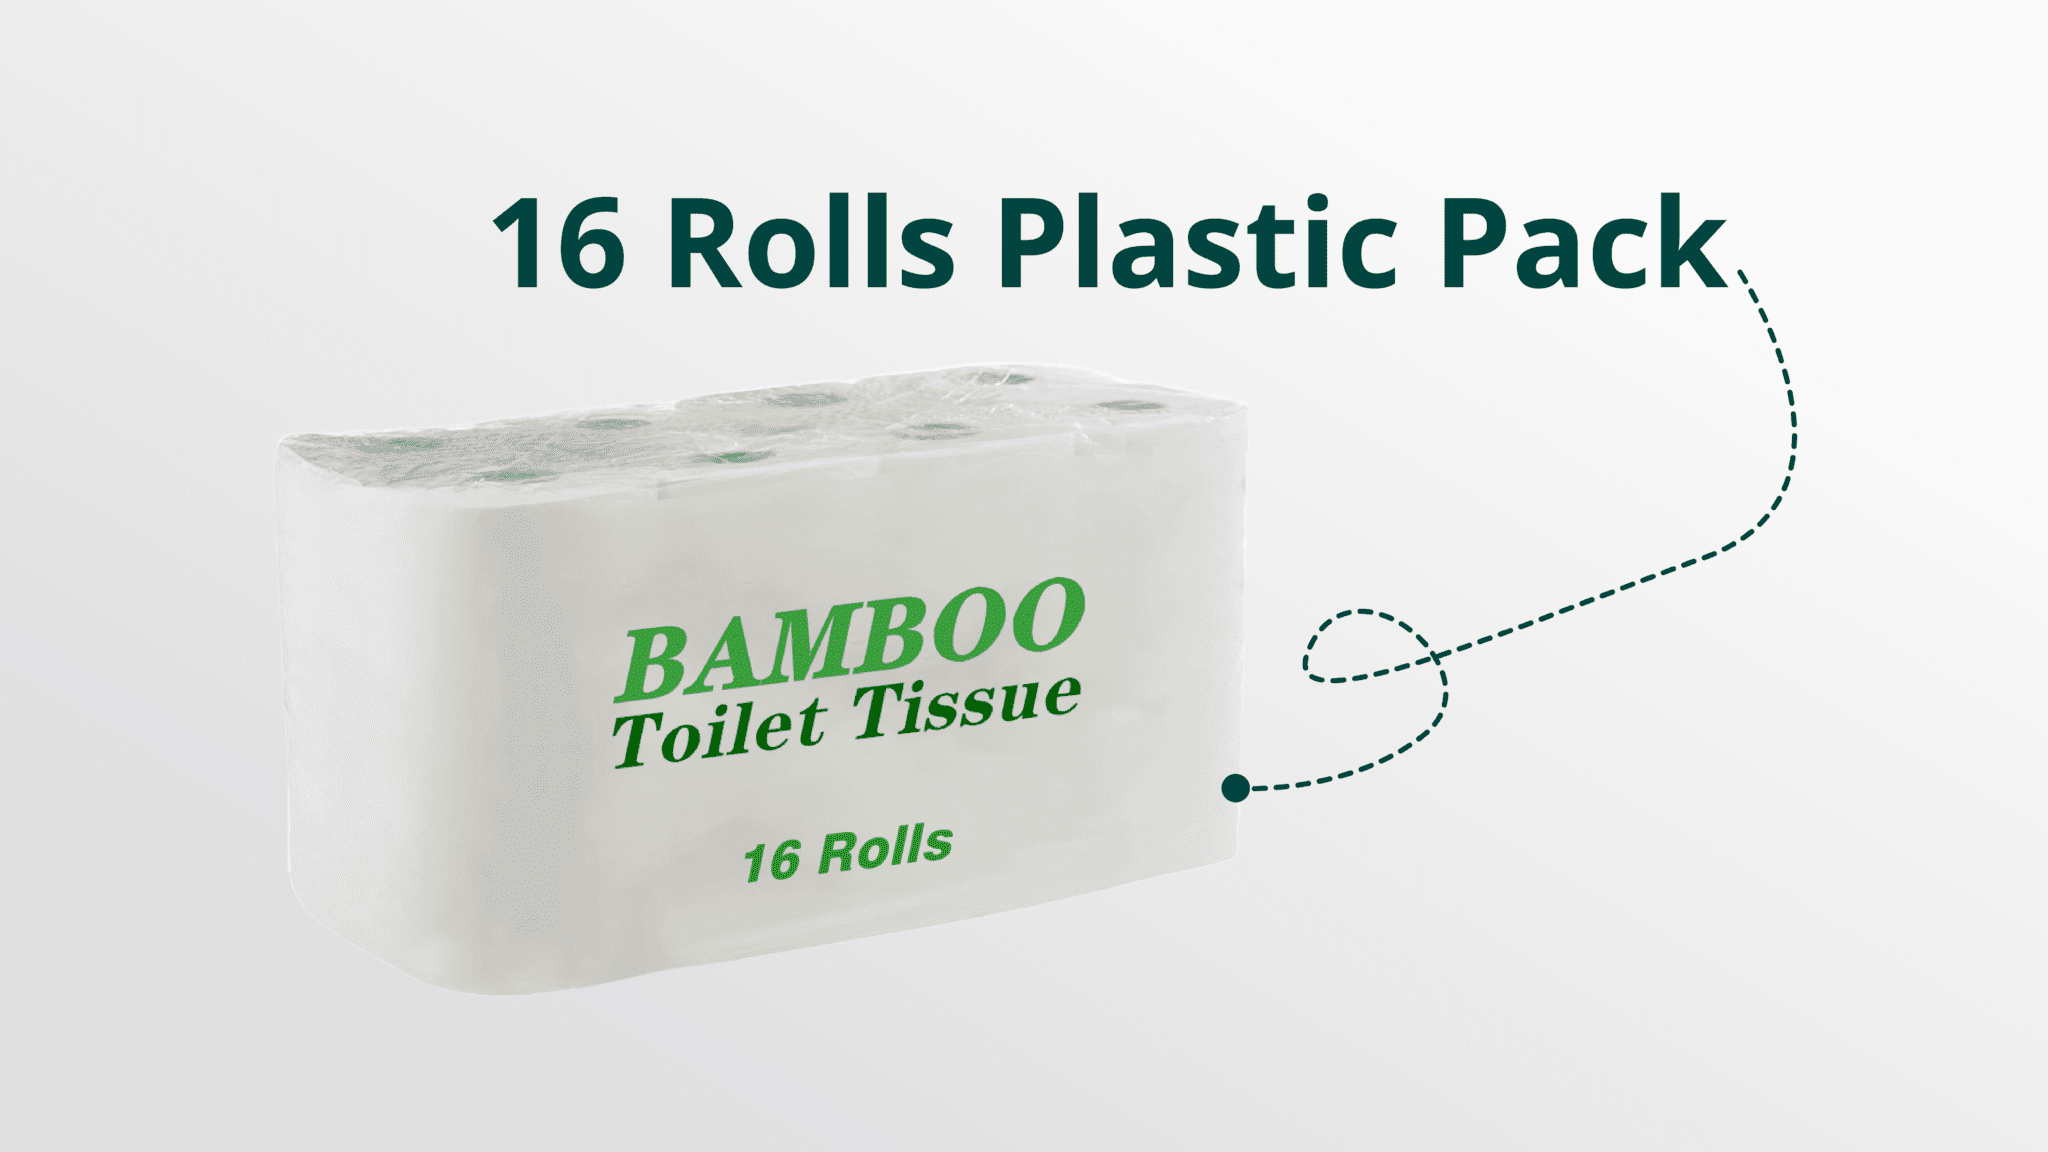 16 rolls plastic pack toilet paper